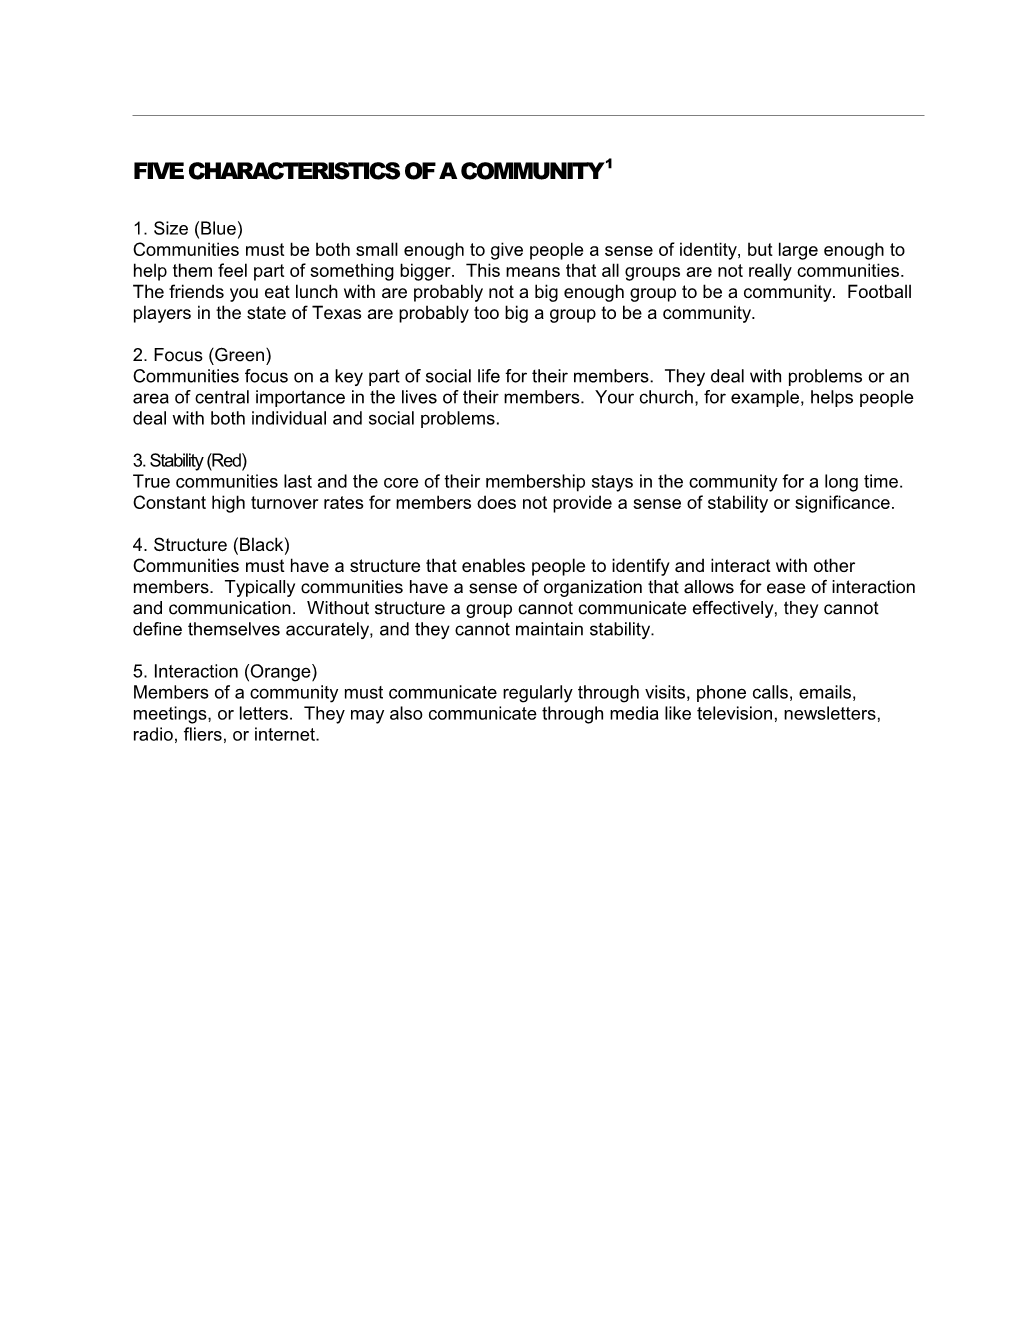 Five Characteristics of a Community 1